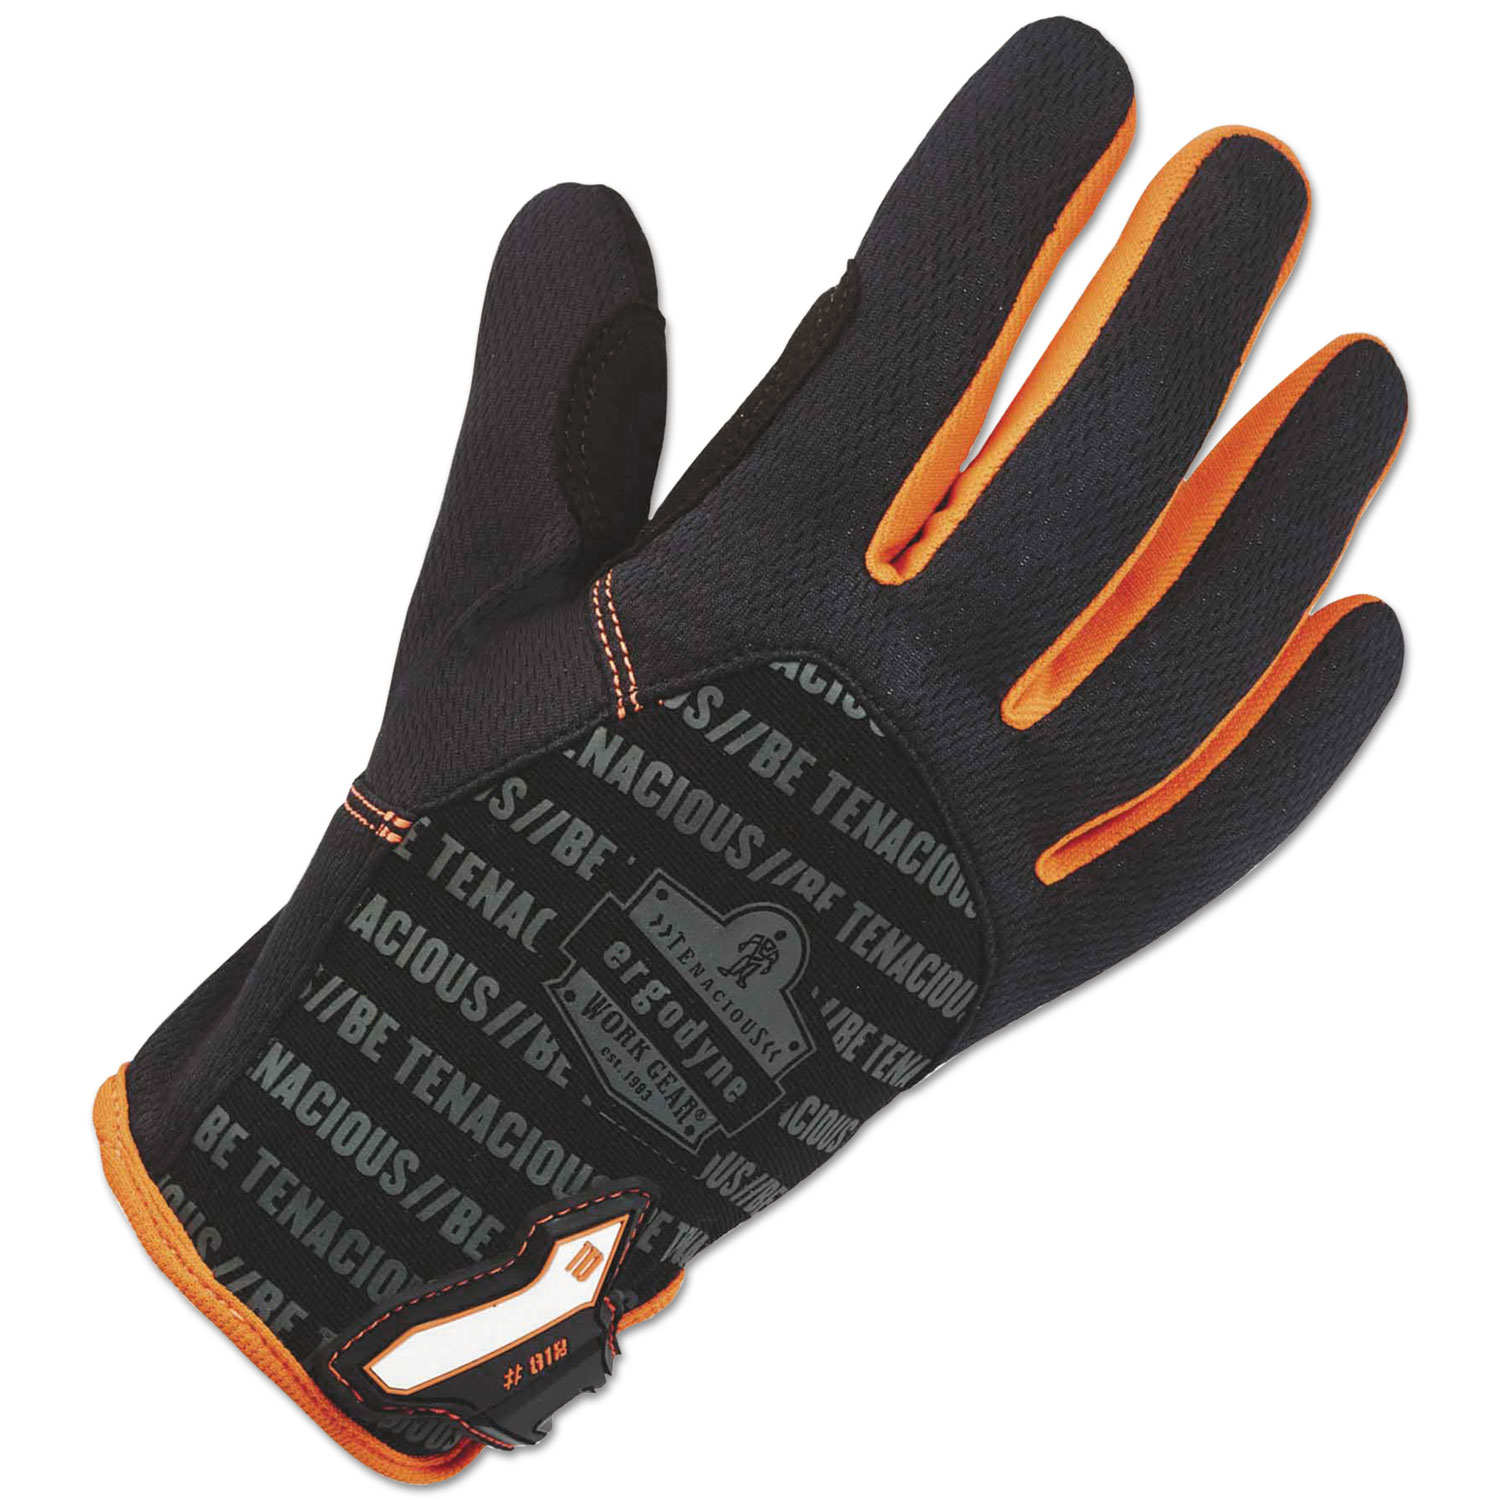  ergodyne 17173 ProFlex 812 Standard Utility Gloves, Black, Medium, 1 Pair (EGO17173) 